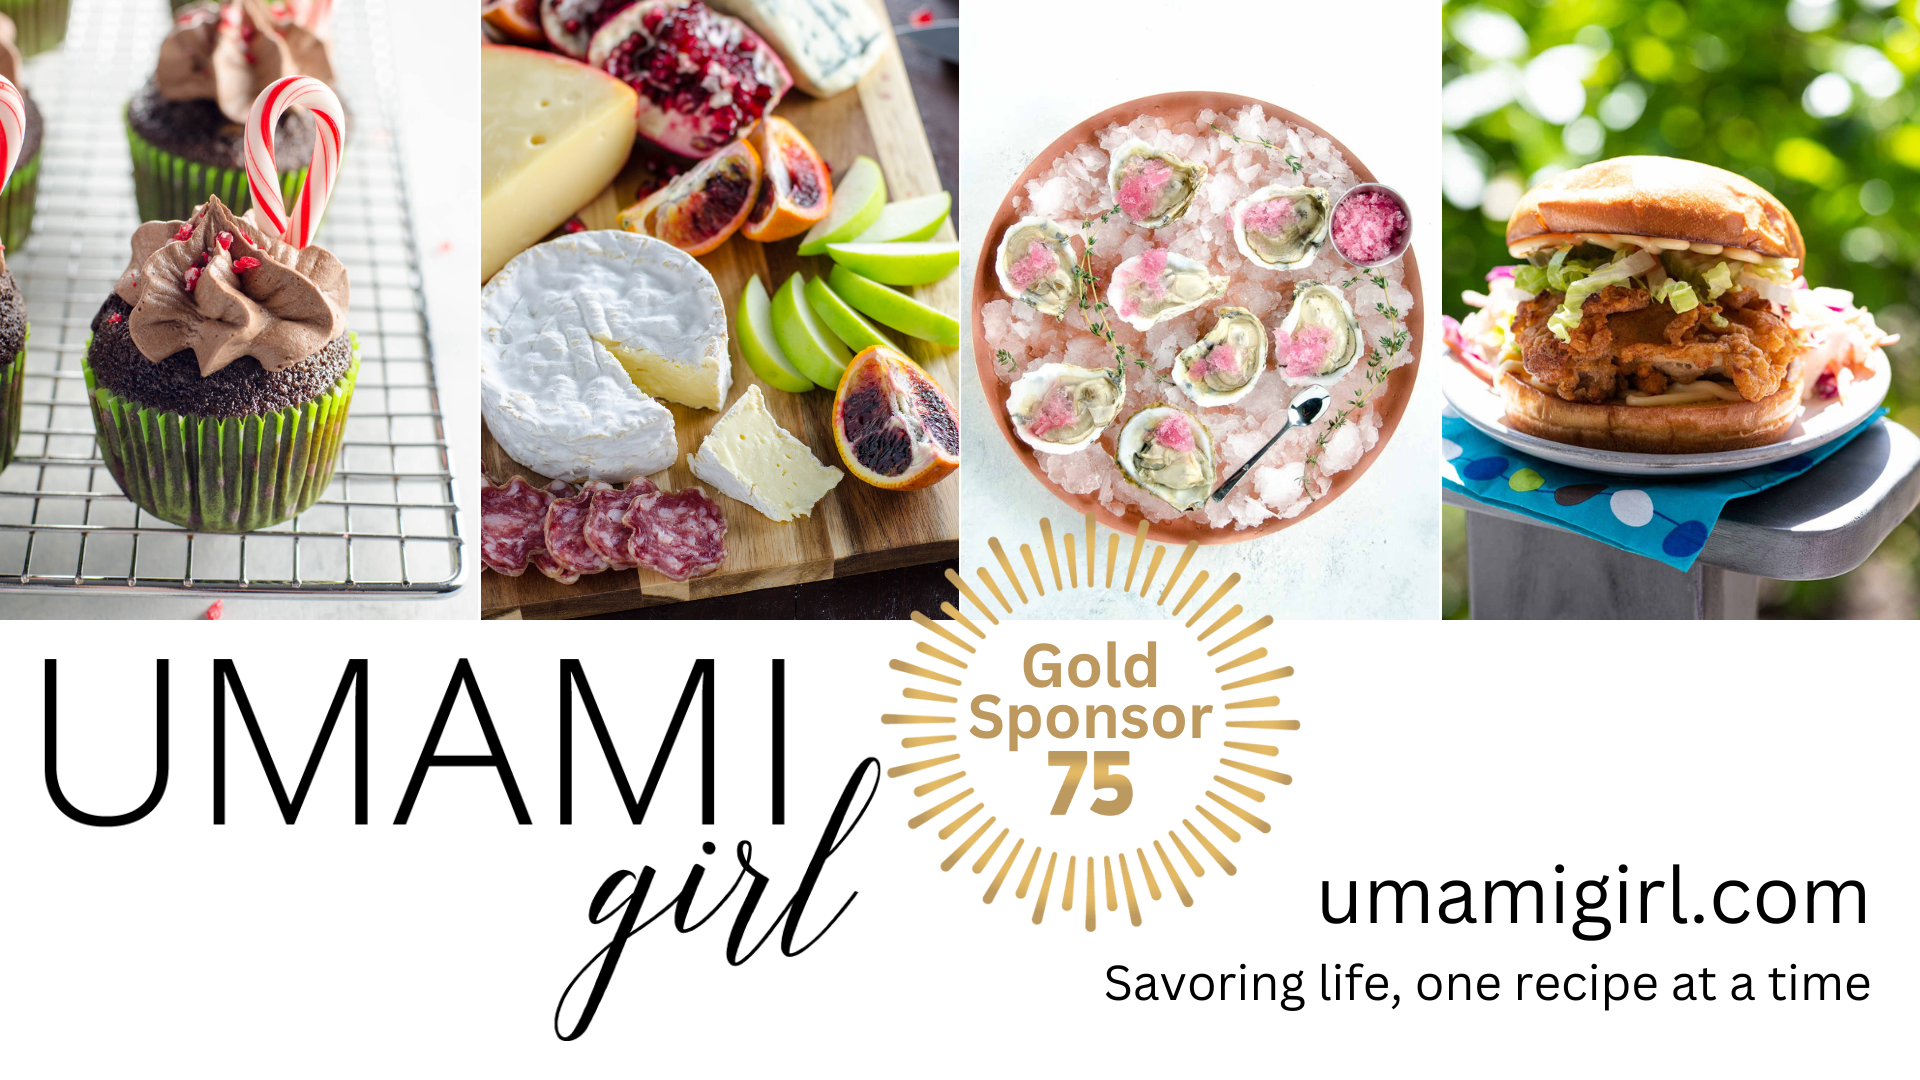 umami girl gold sponsor